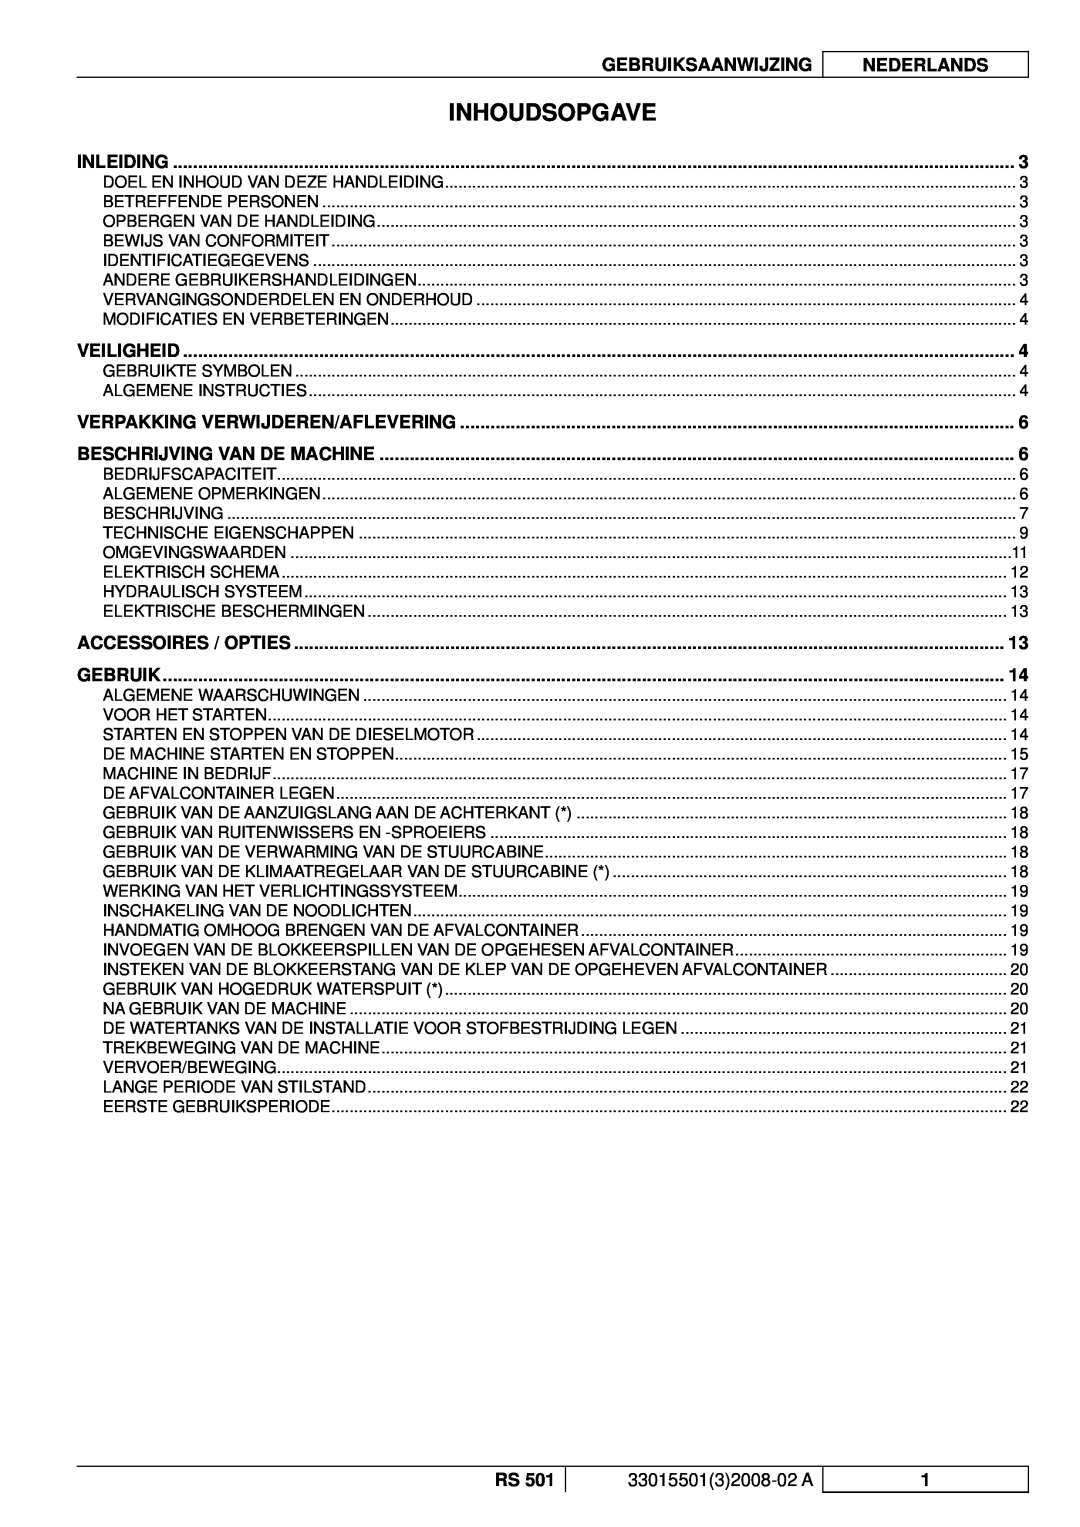 Nilfisk-ALTO RS 501 manuel dutilisation Inhoudsopgave, Nederlands, Gebruiksaanwijzing 